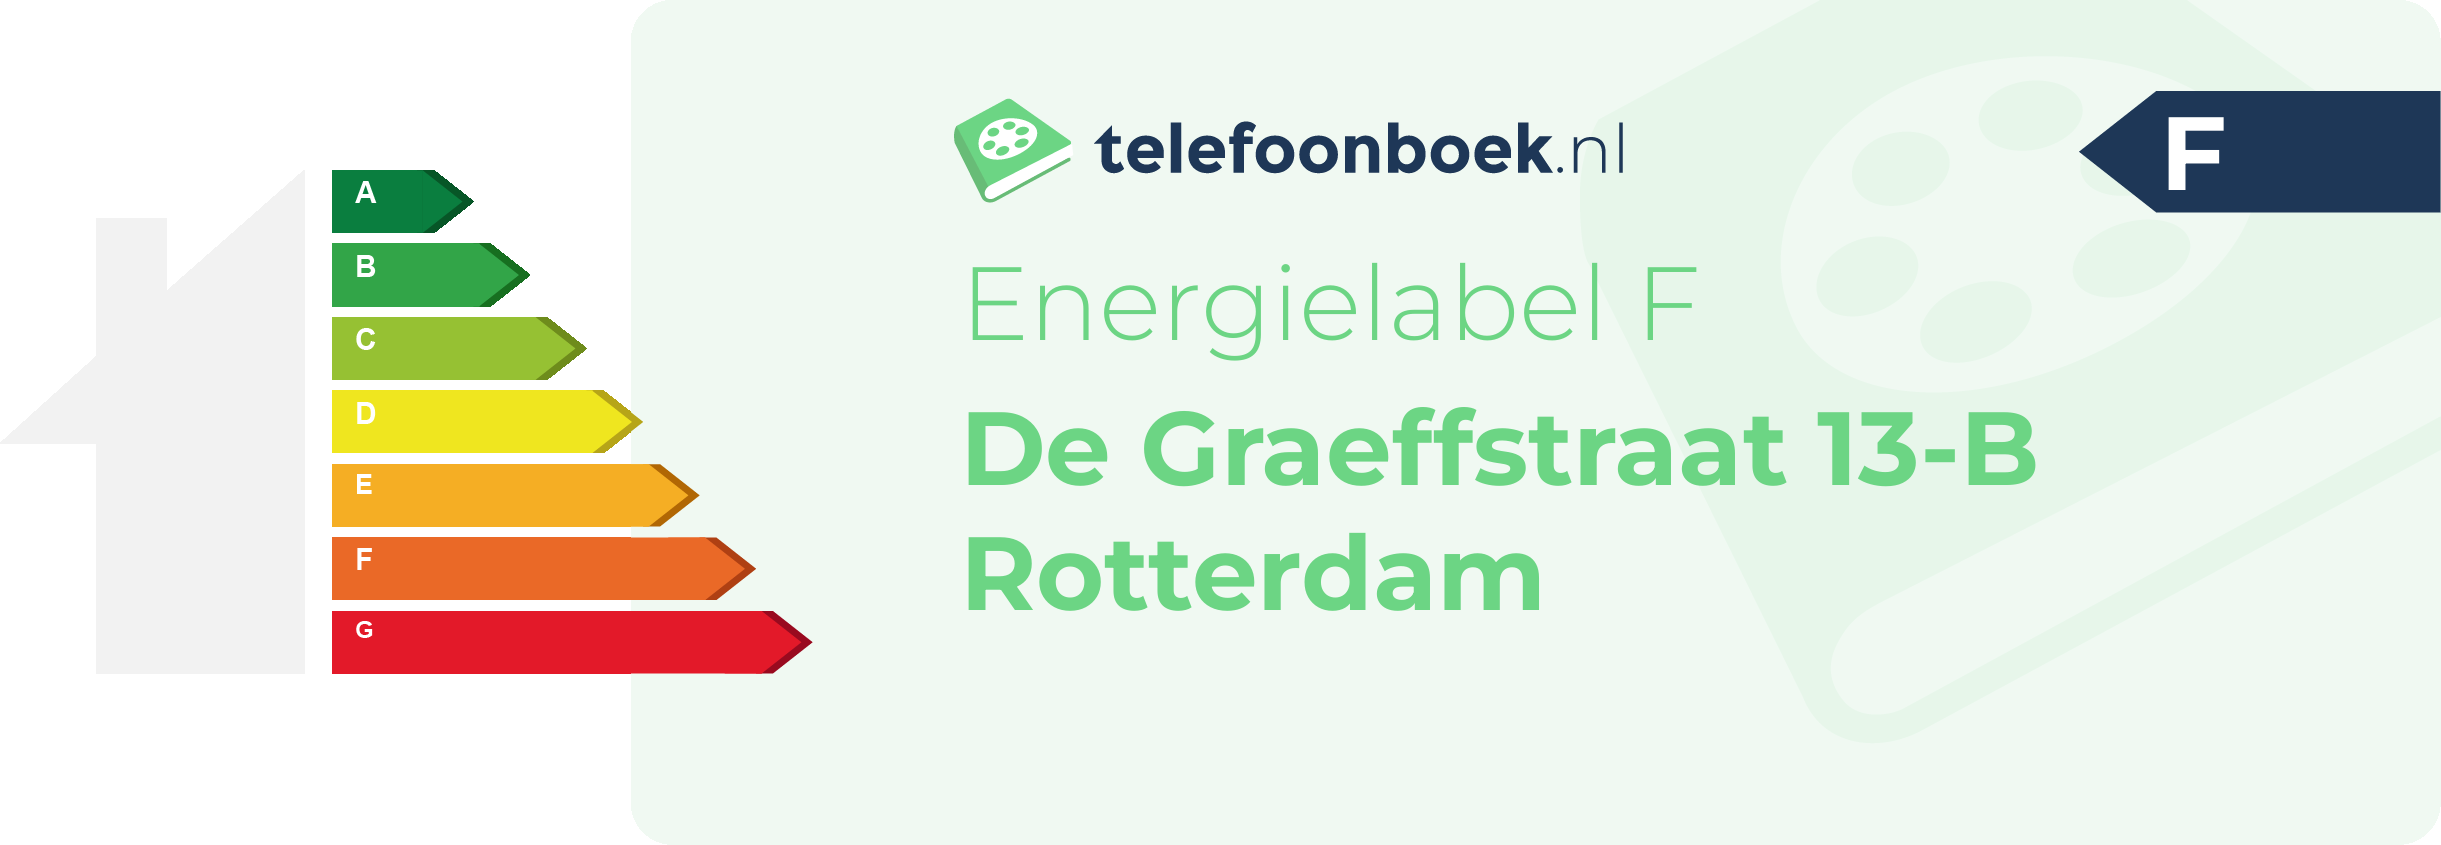 Energielabel De Graeffstraat 13-B Rotterdam